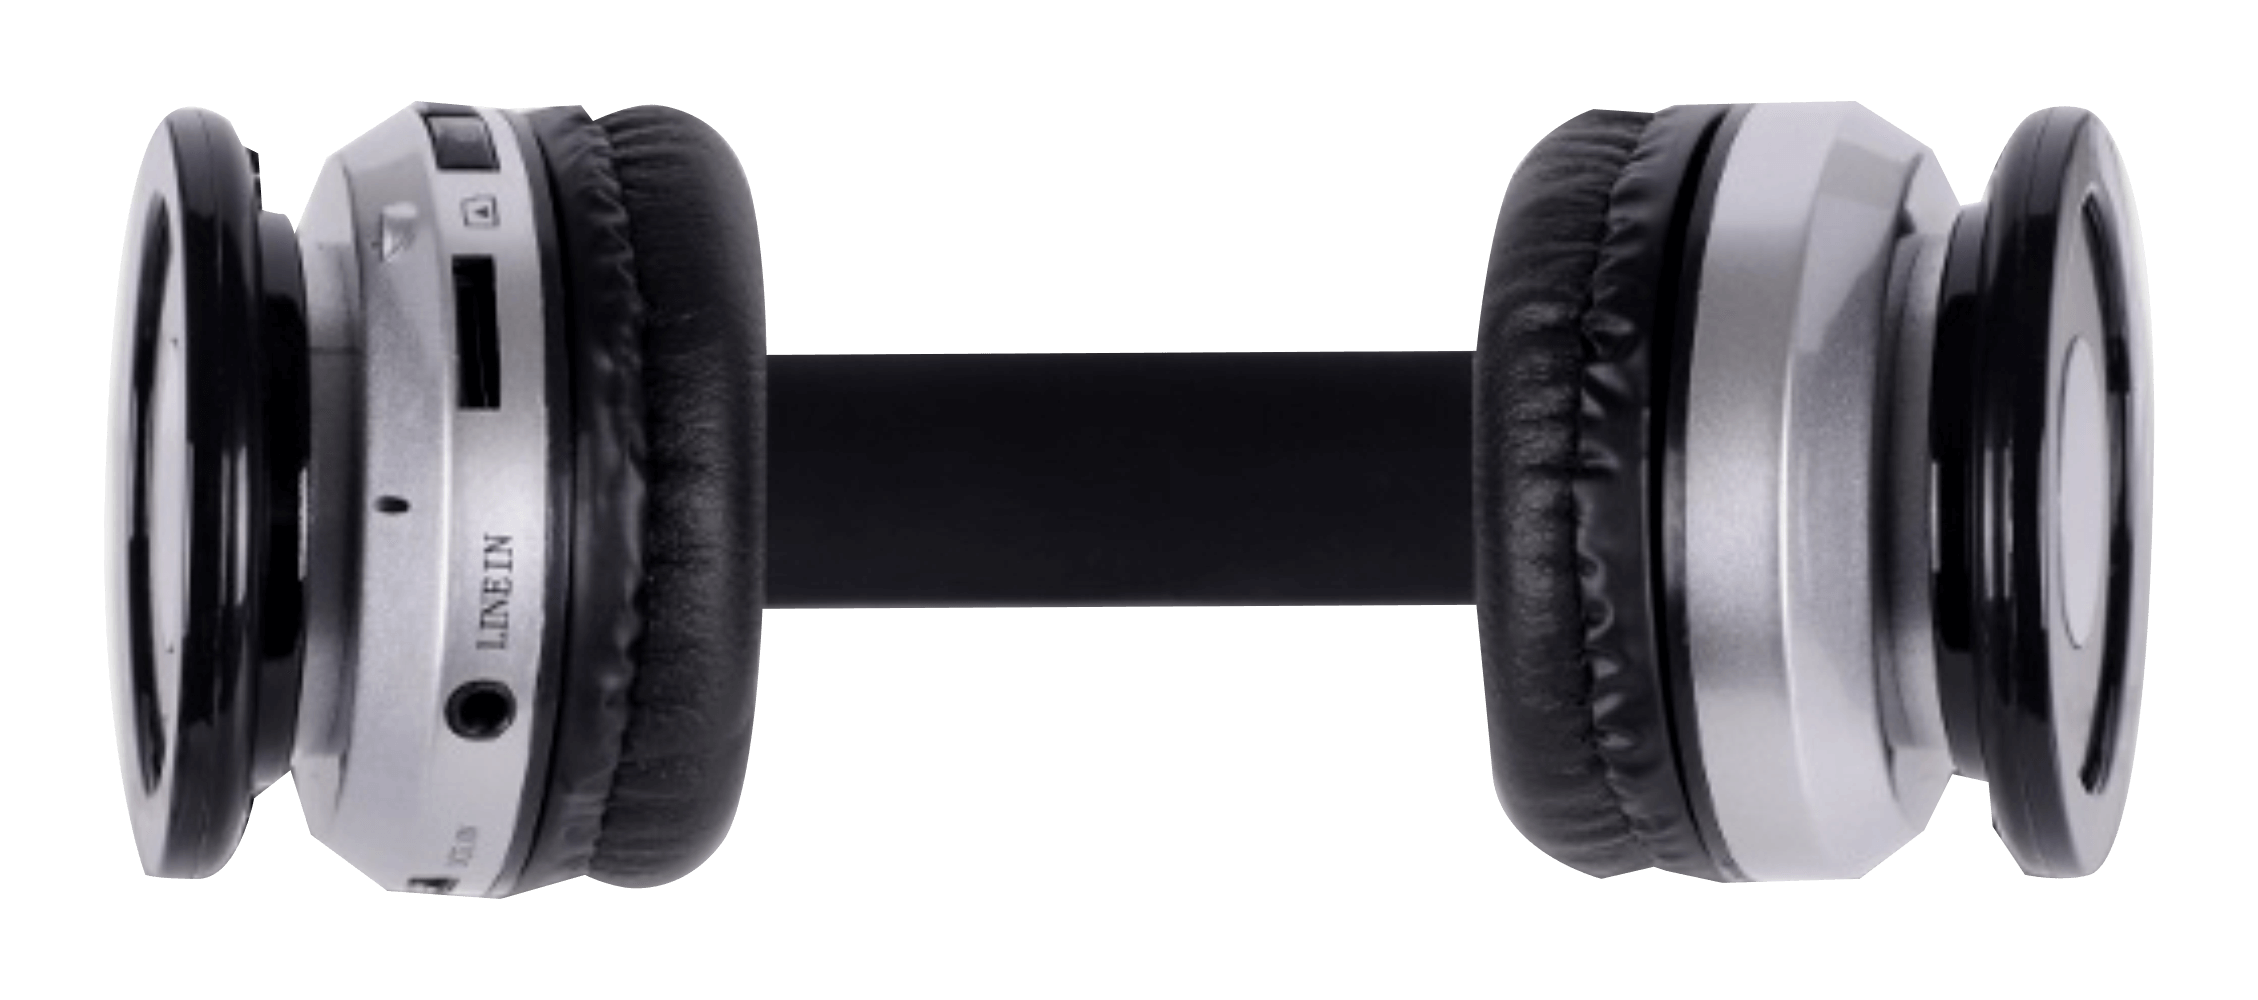 LG G5 SE (H840) bluetooth fejhallgató Rebeltec Crystal fekete